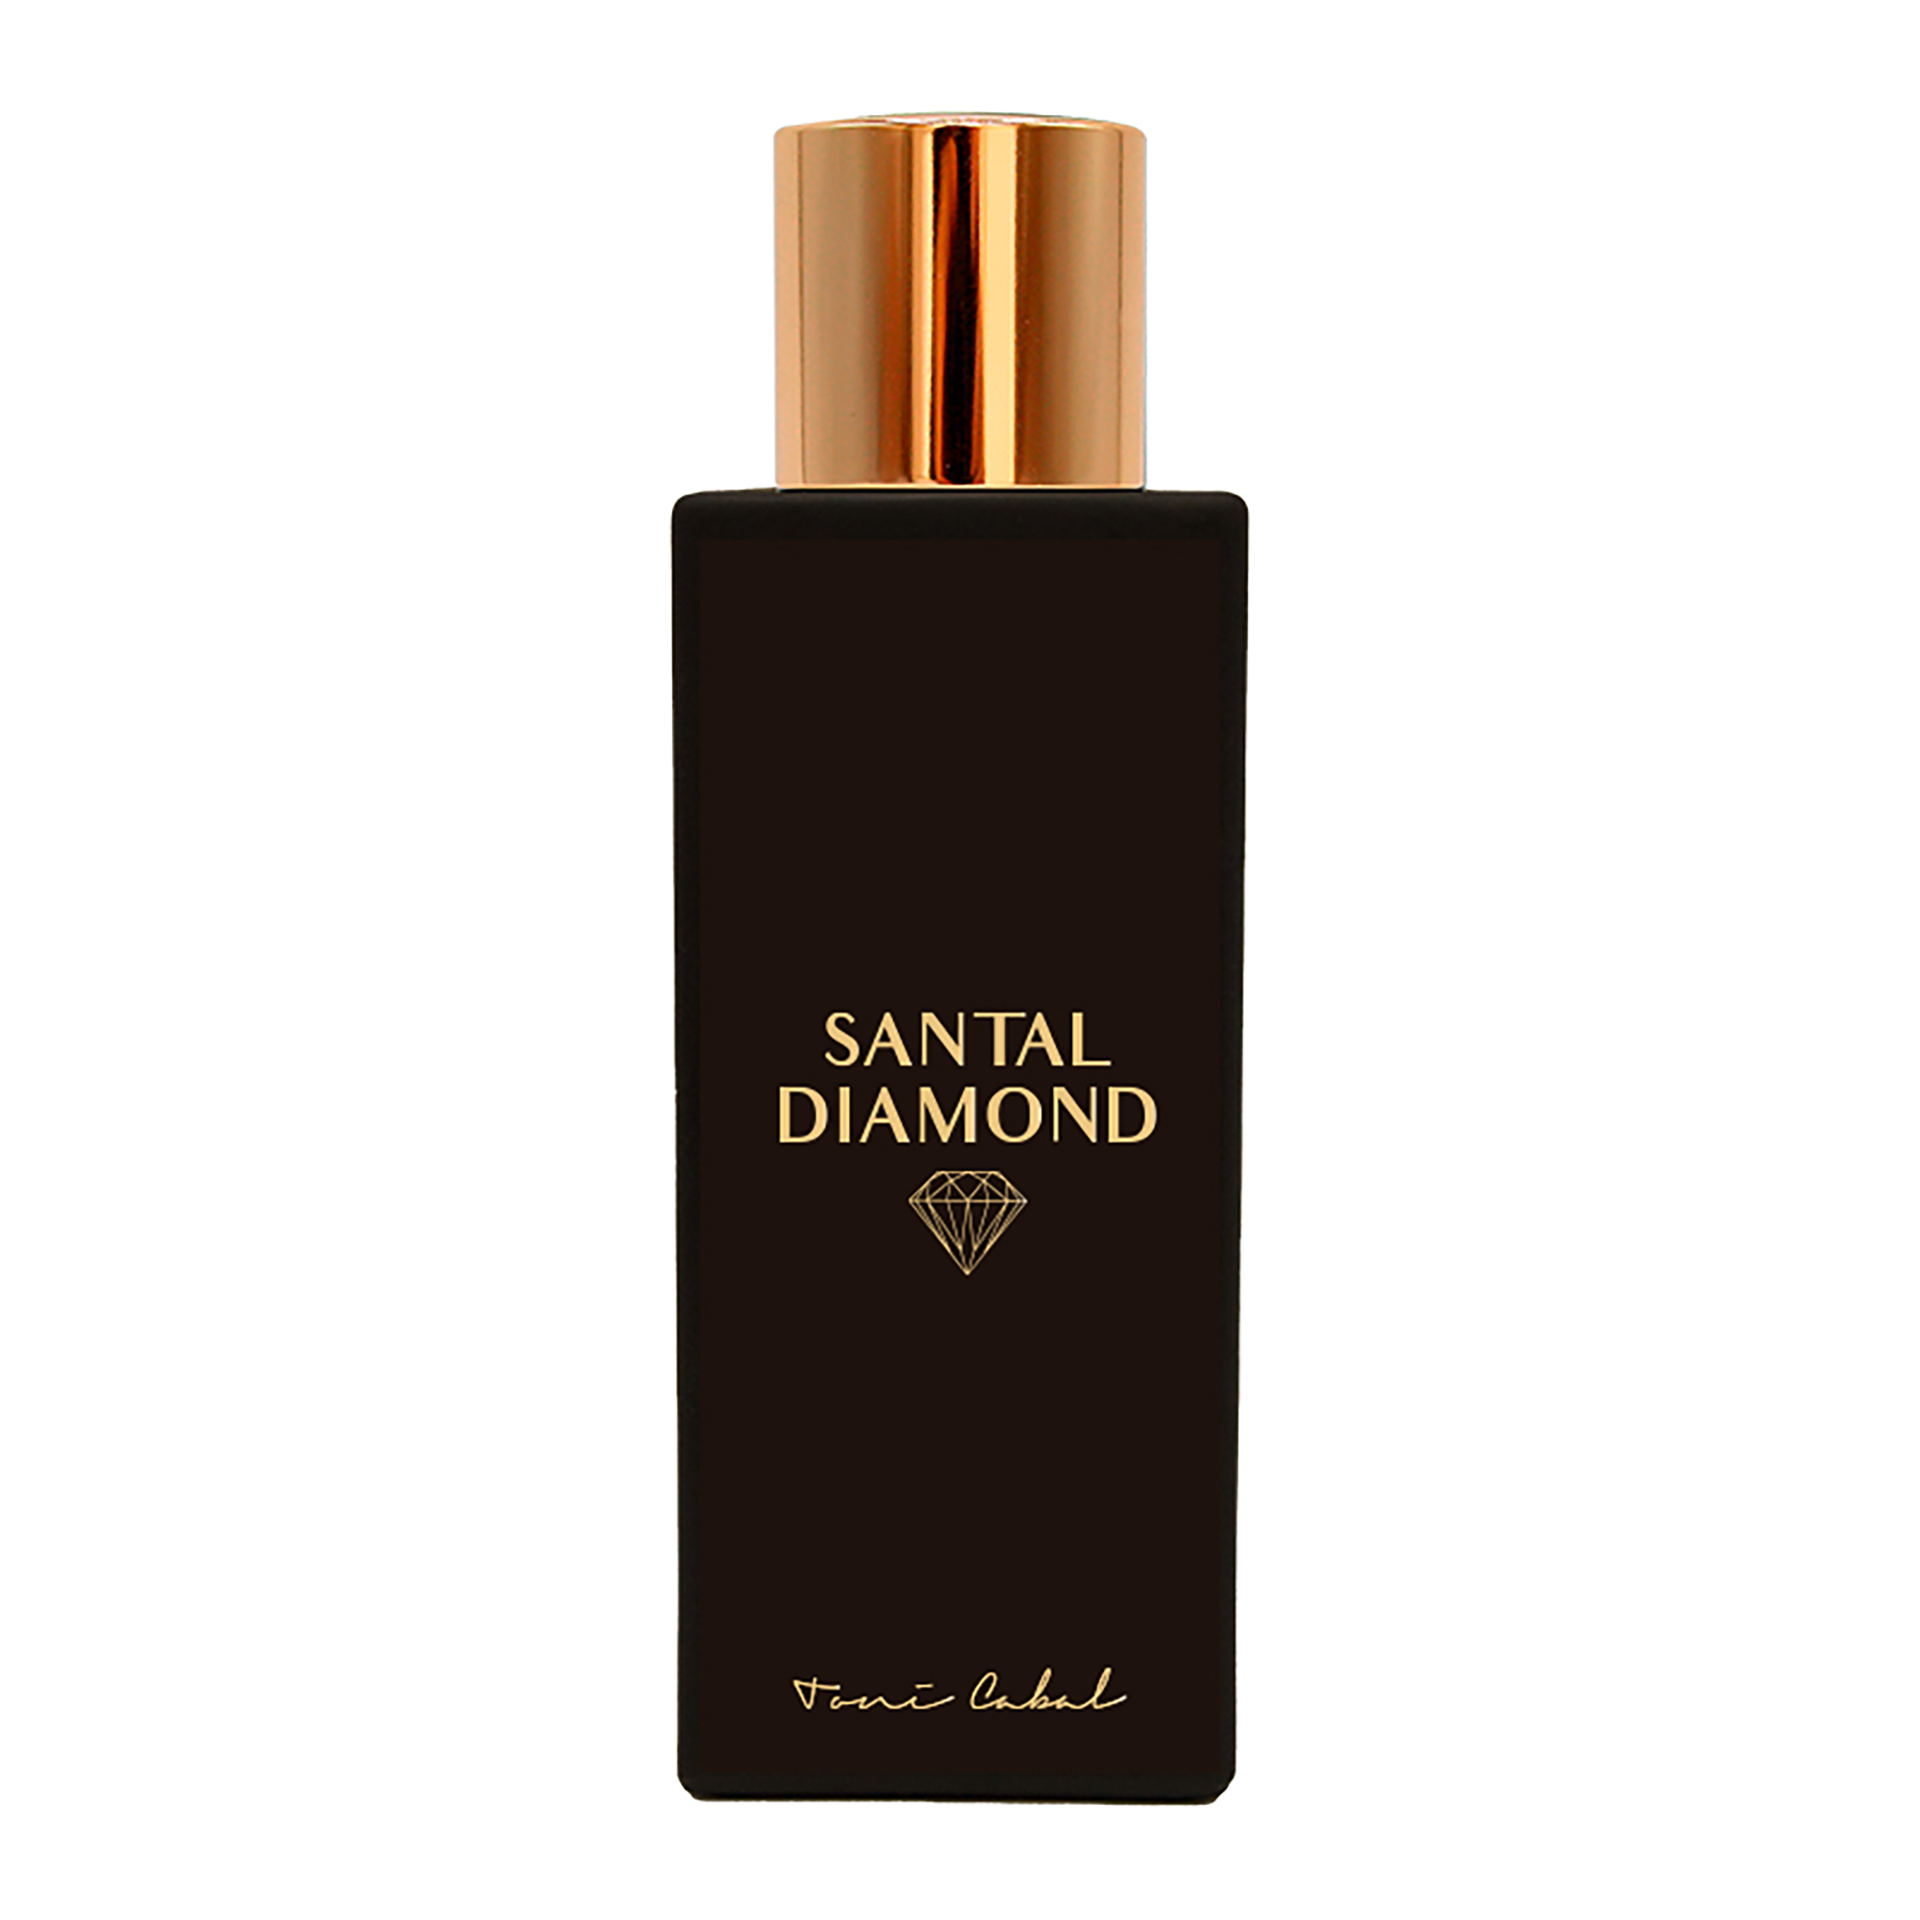 santal diamond 100ml toni cabal daring light perfumes niche barcelona - Santal Diamond